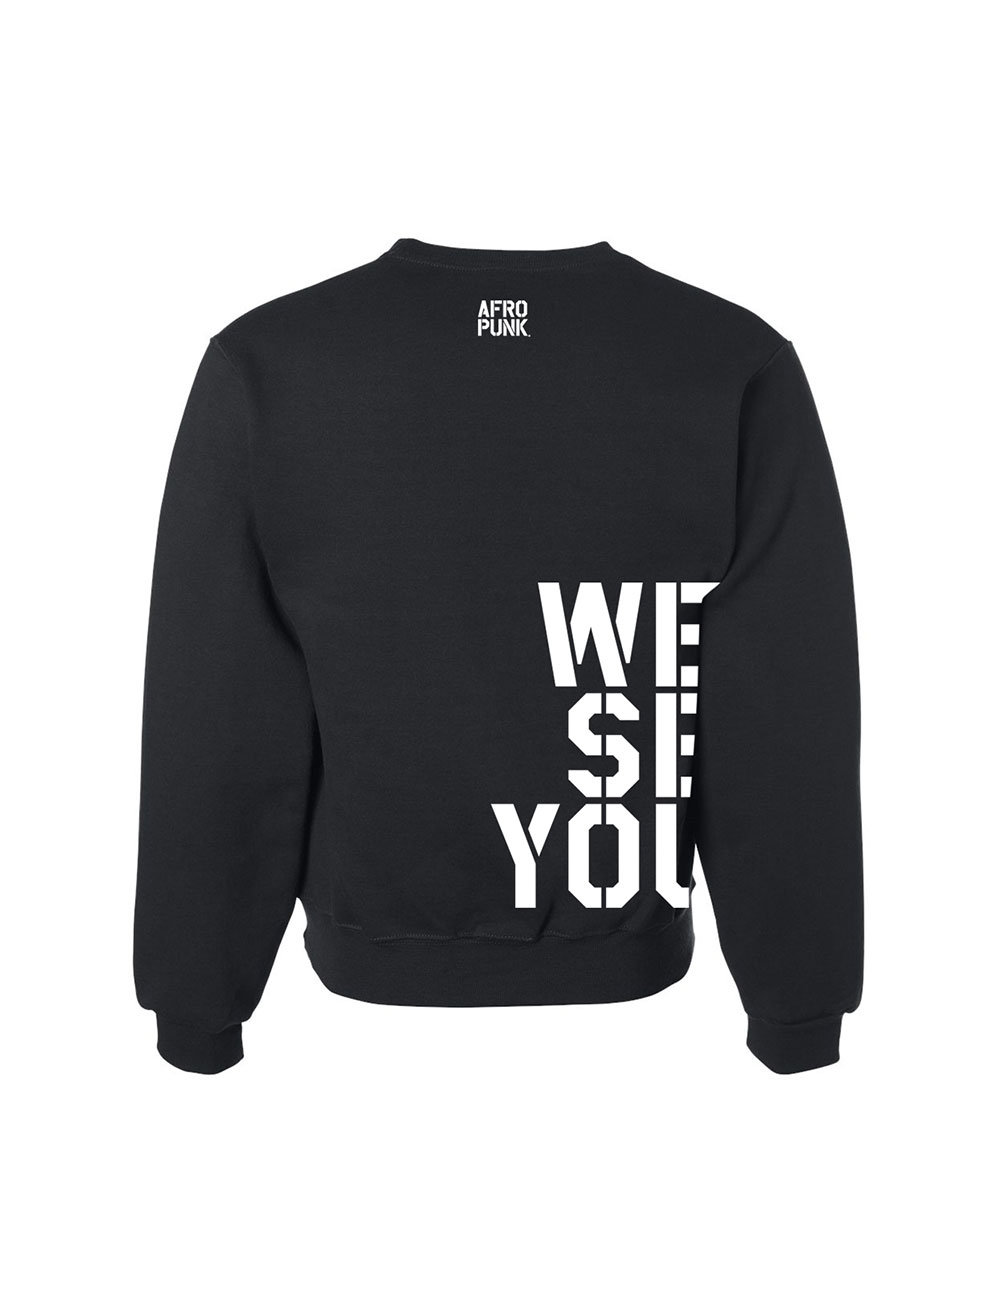 Afropunk - Official Merch Shop - Sweatshirts -We See You Crewneck Back